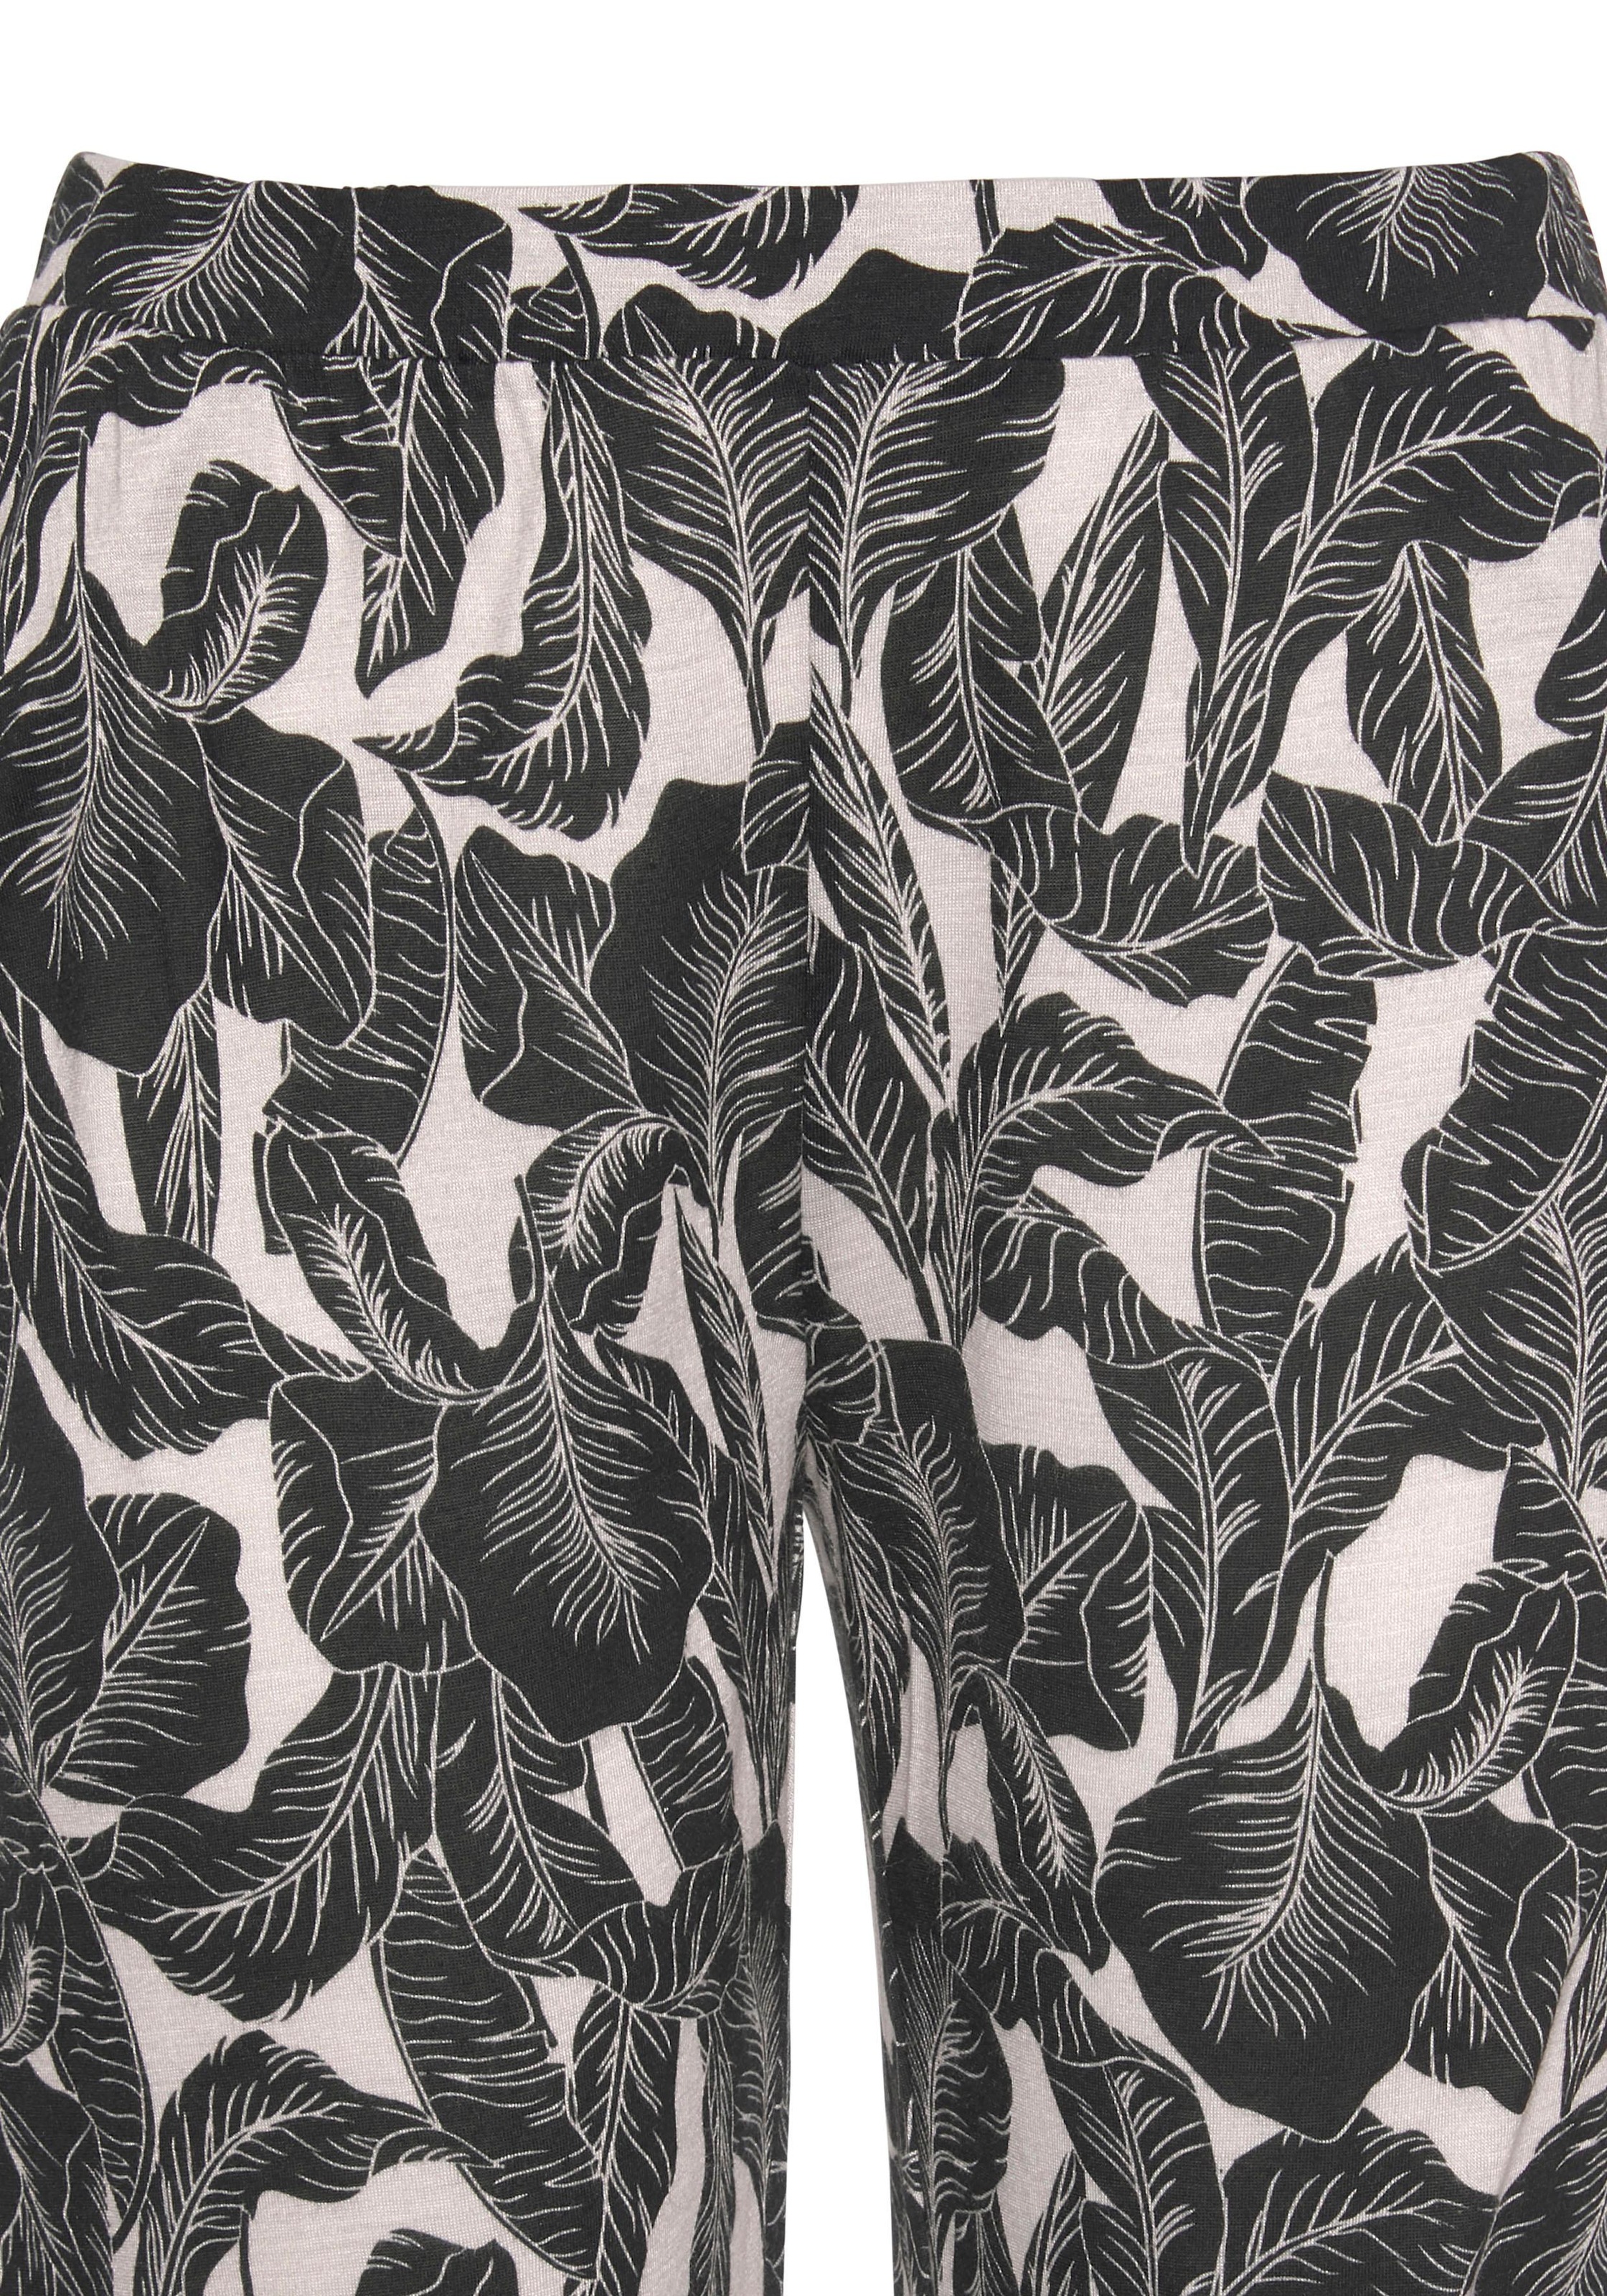 Pyjama, LASCANA OTTO tlg., Stück), 1 mit Leaf-Print bei (2